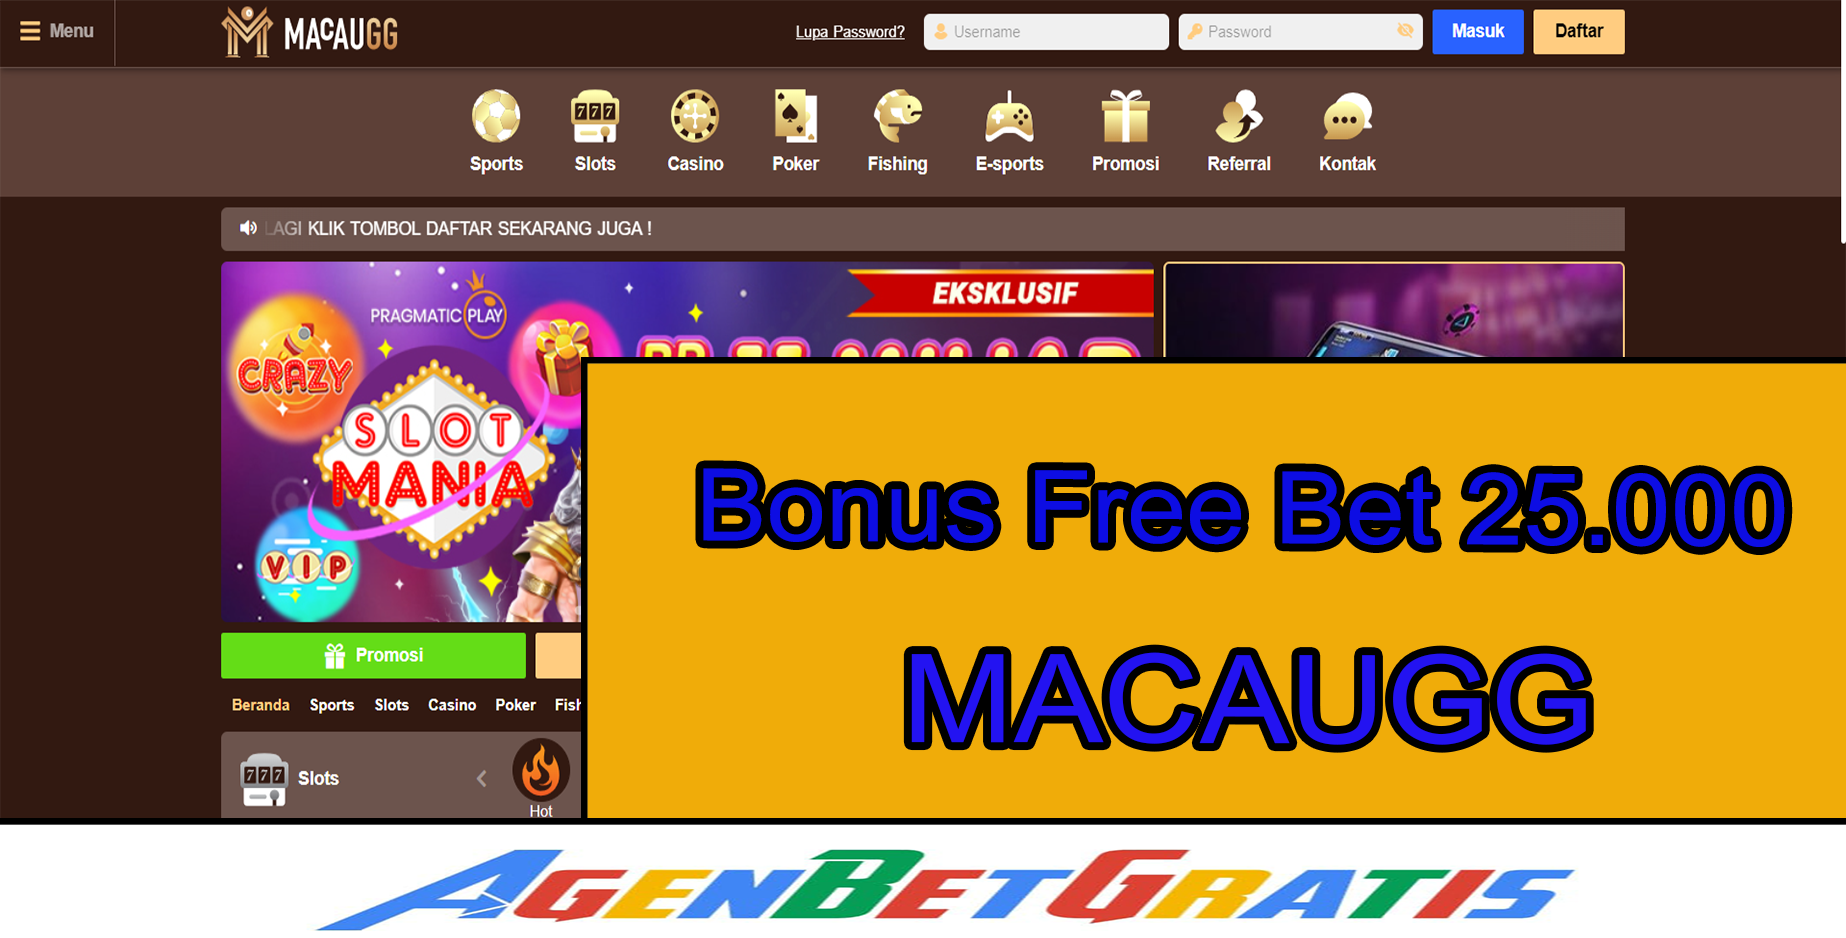 MACAUGG - Bonus FreeBet 25.000